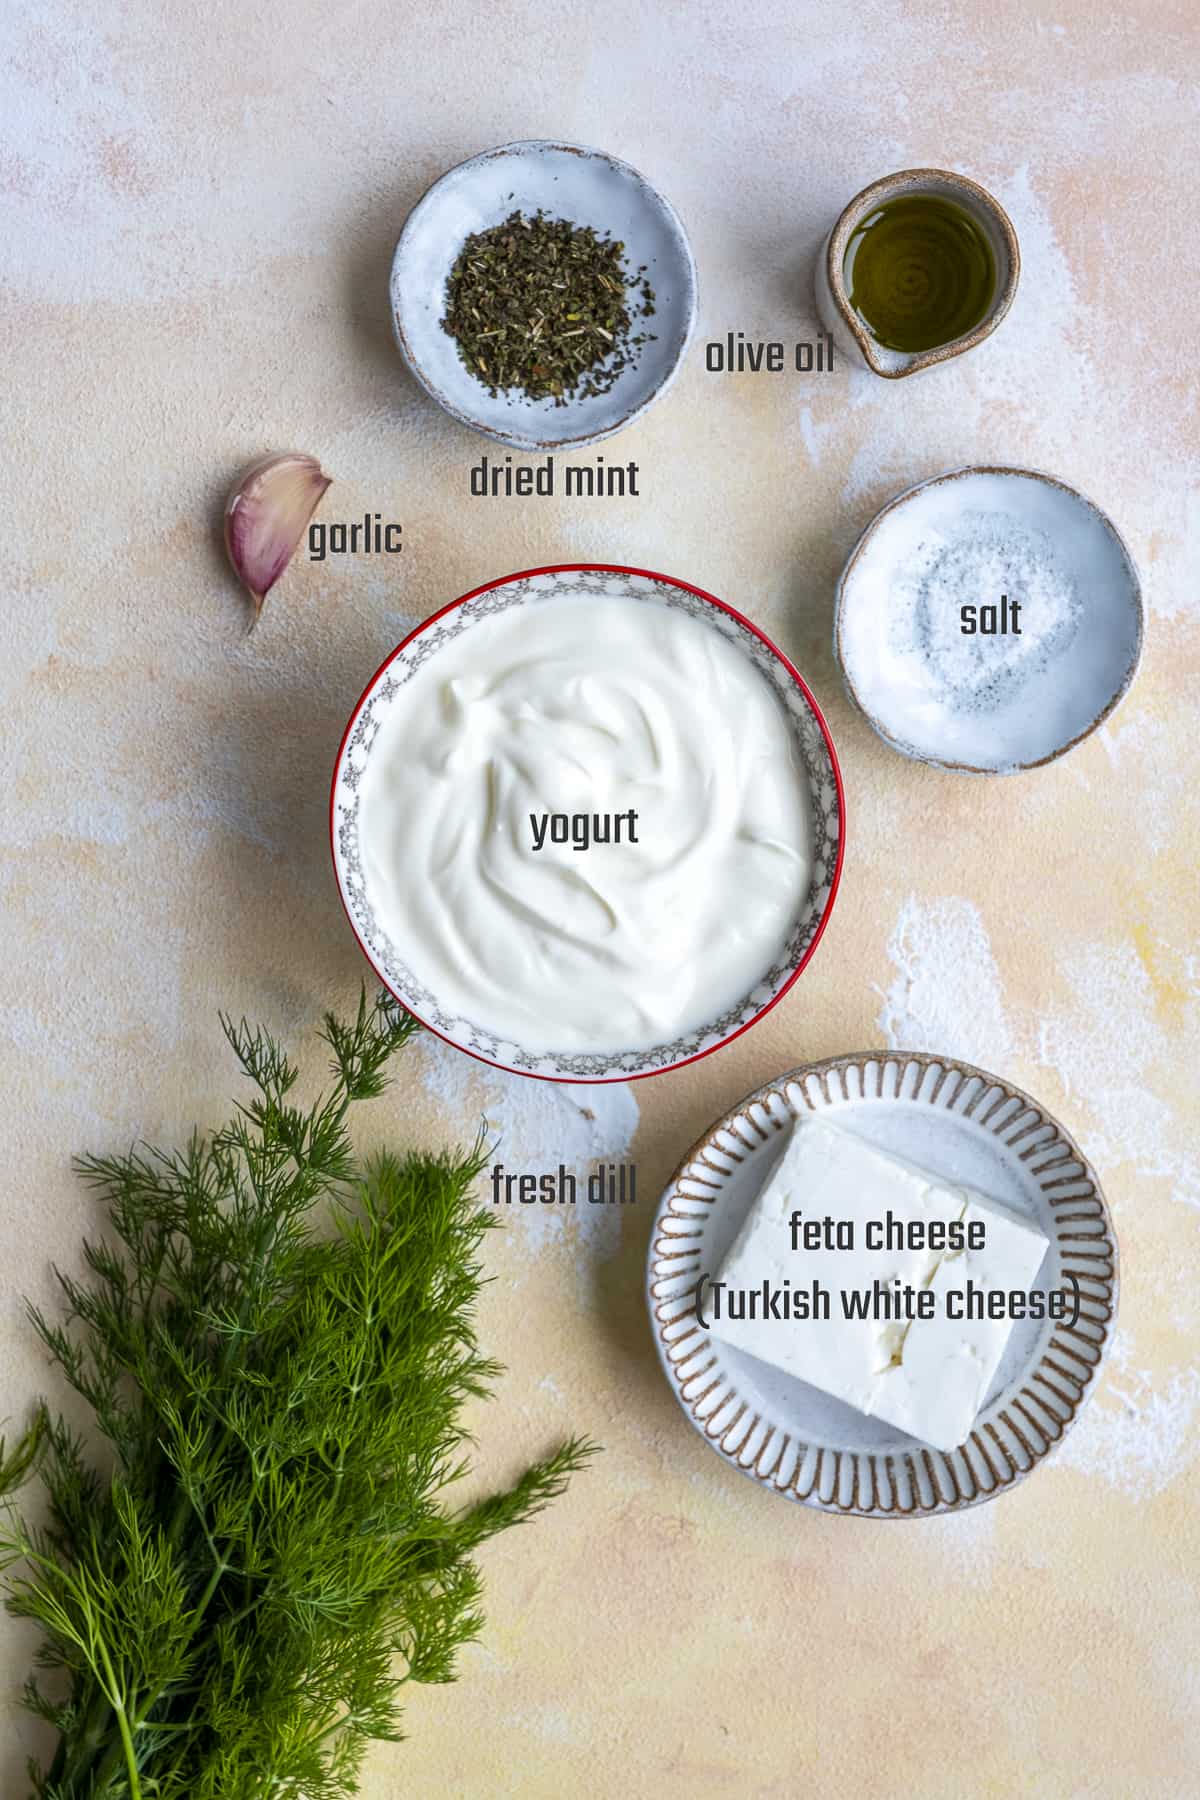 Greek yogurt, feta cheese, a clove of garlic, dried mint, olive oil, salt and fresh dill on a light background.